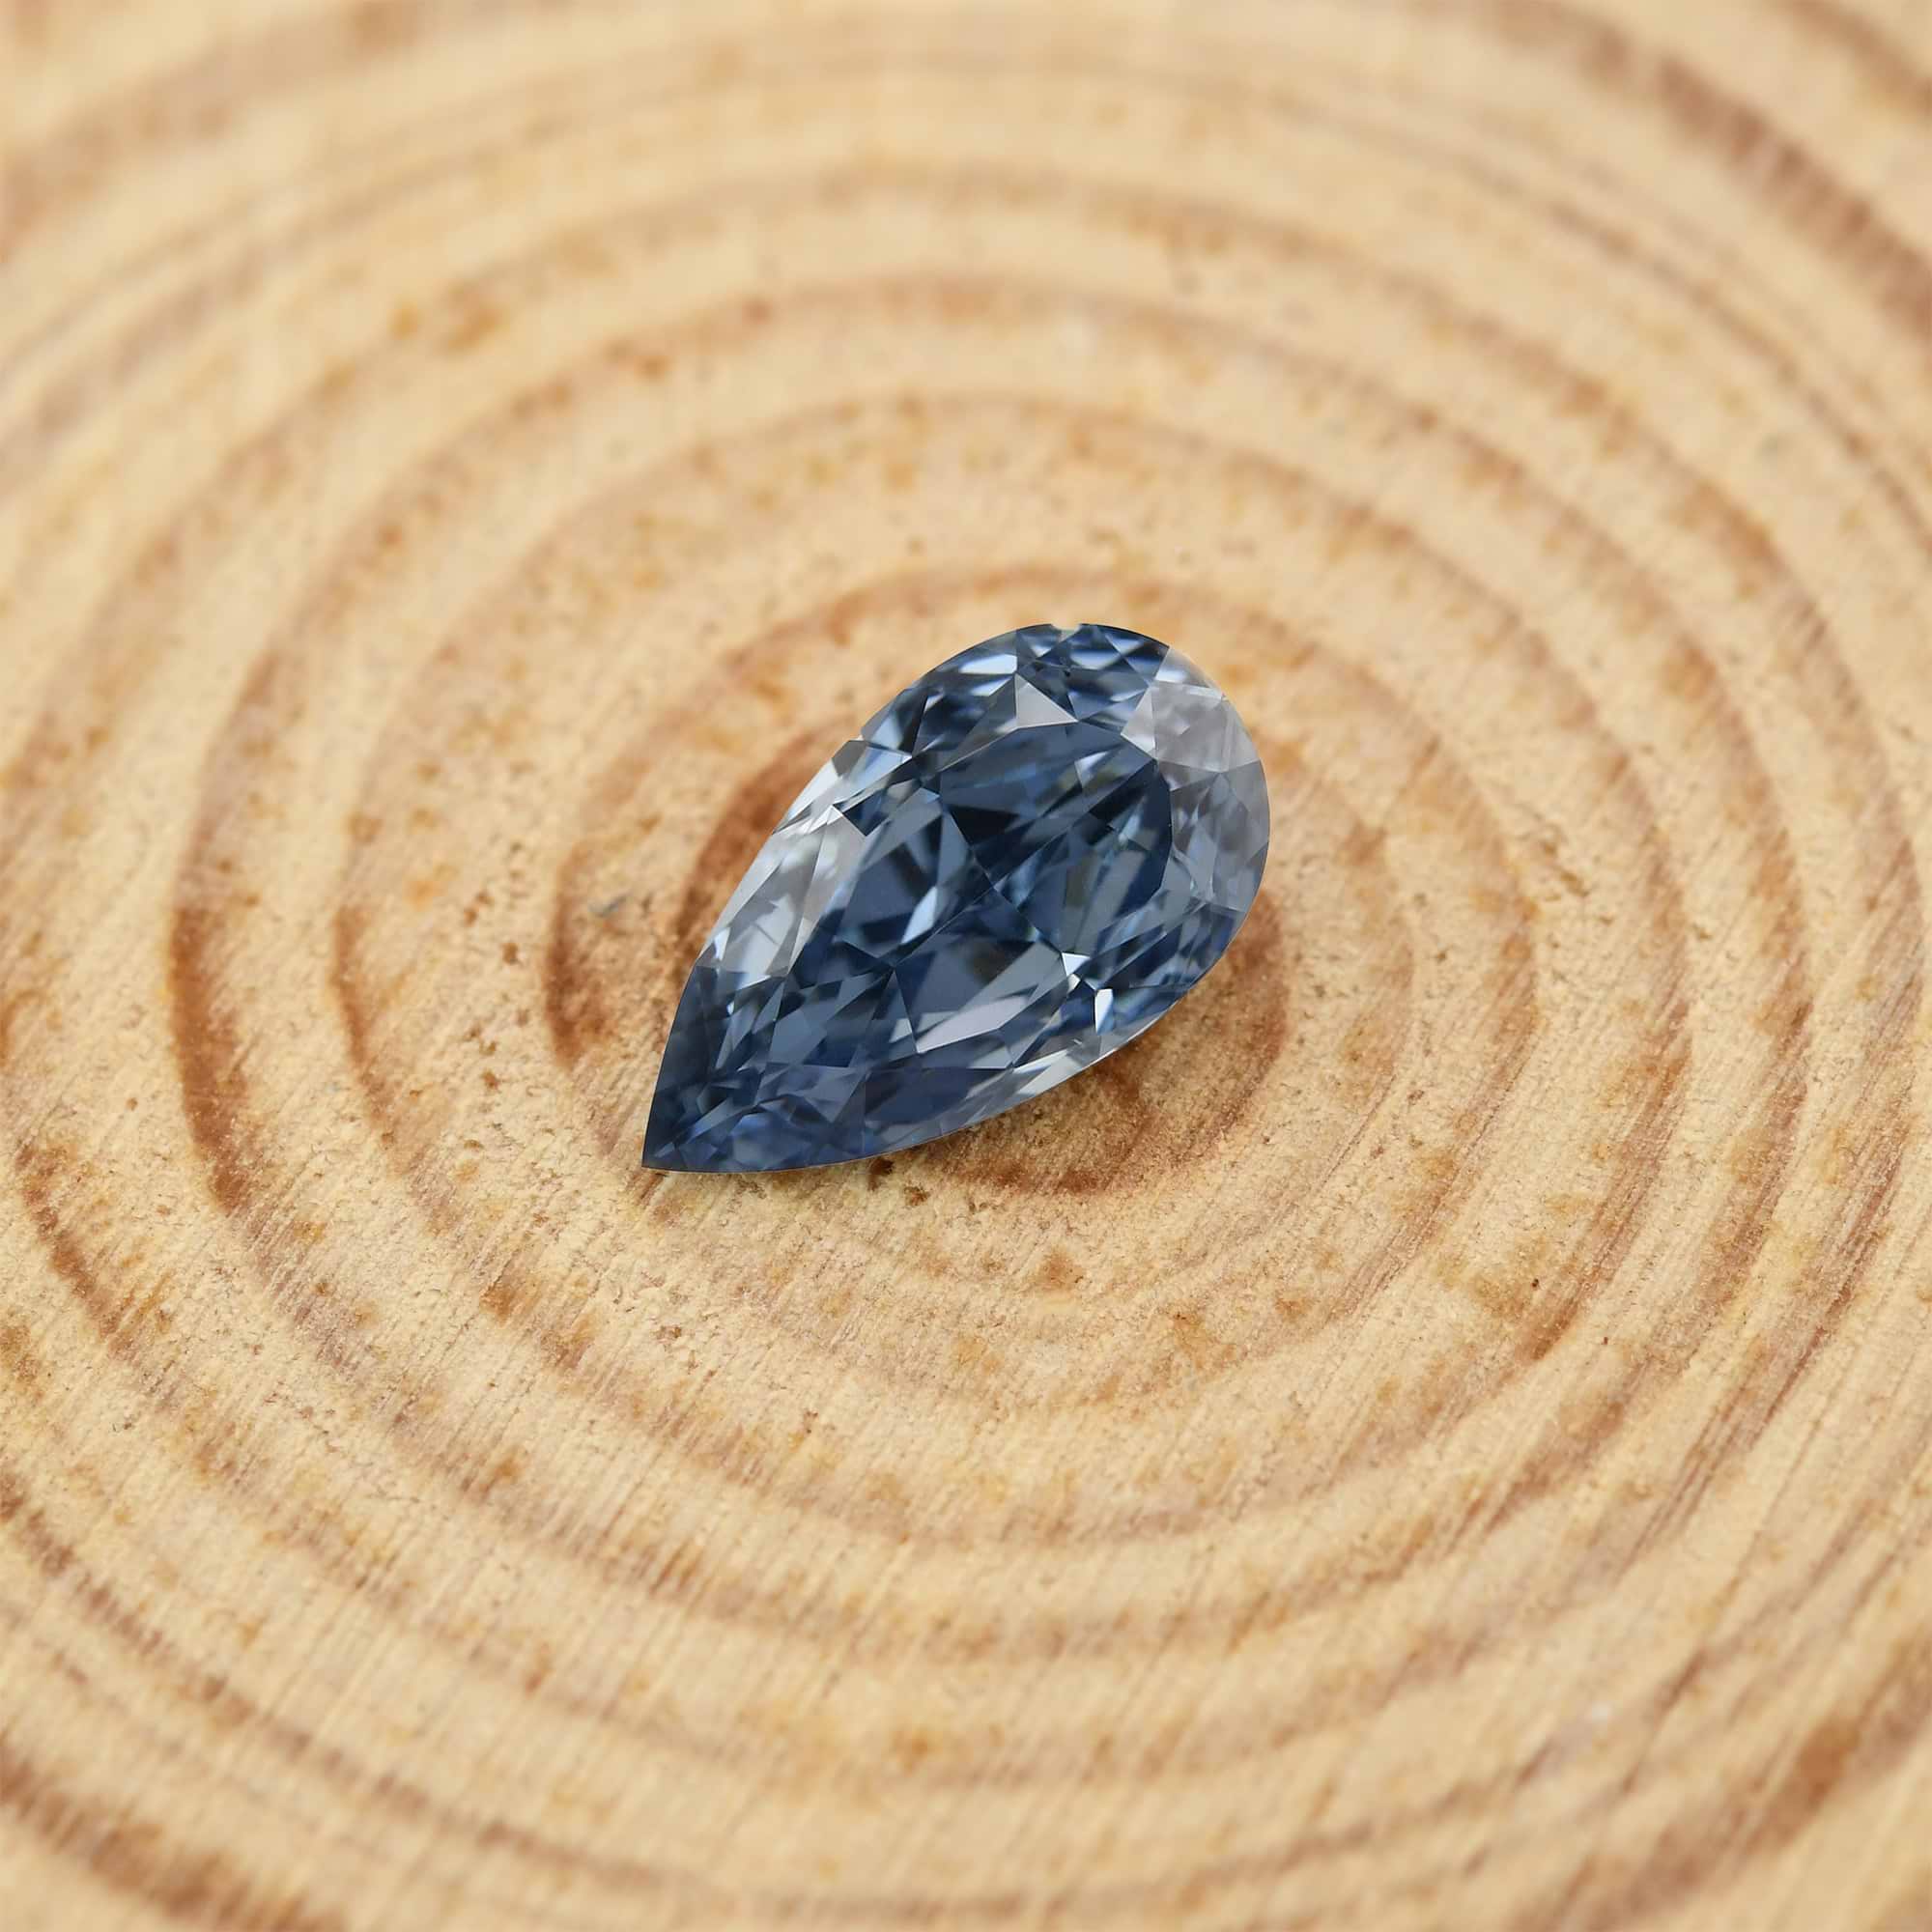 LEIBISH 0.65 carat, Fancy Vivid Blue Diamond, Pear Shape, VS2 Clarity